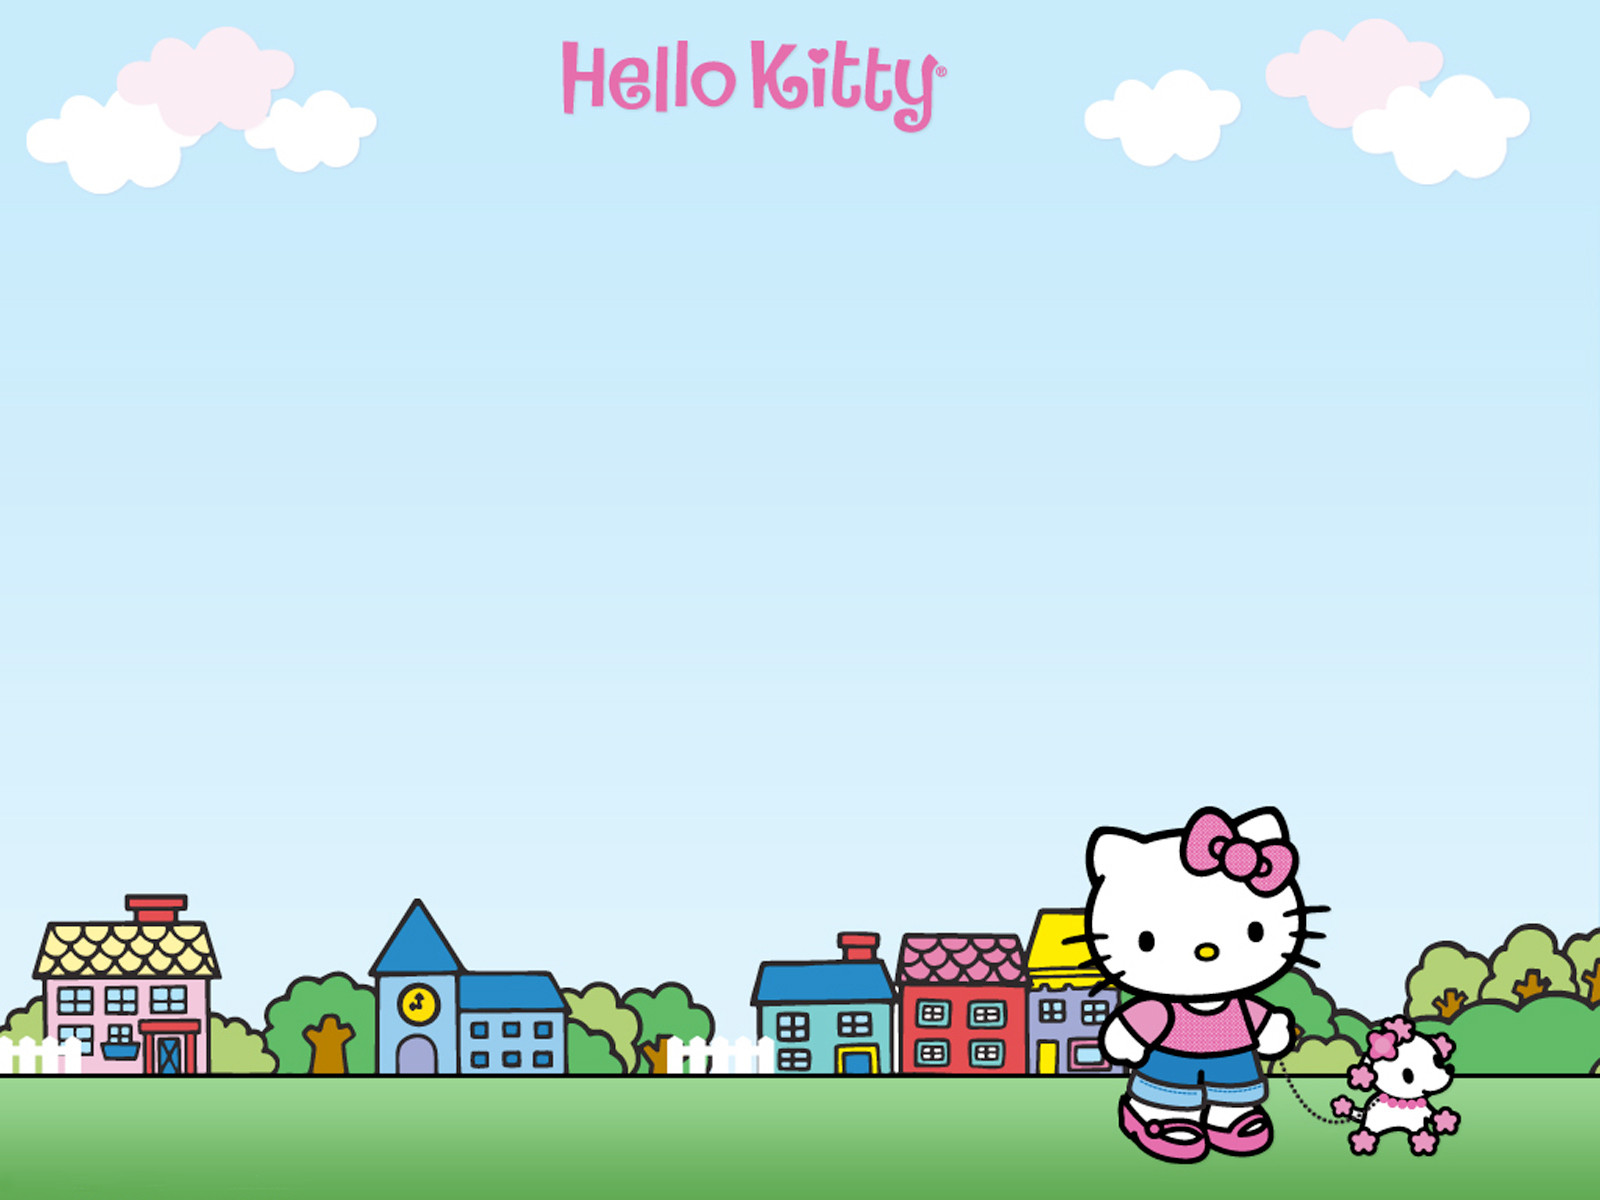 Hello Kitty December Wallpaper 2022 for Desktop - hibyepeachy's Ko